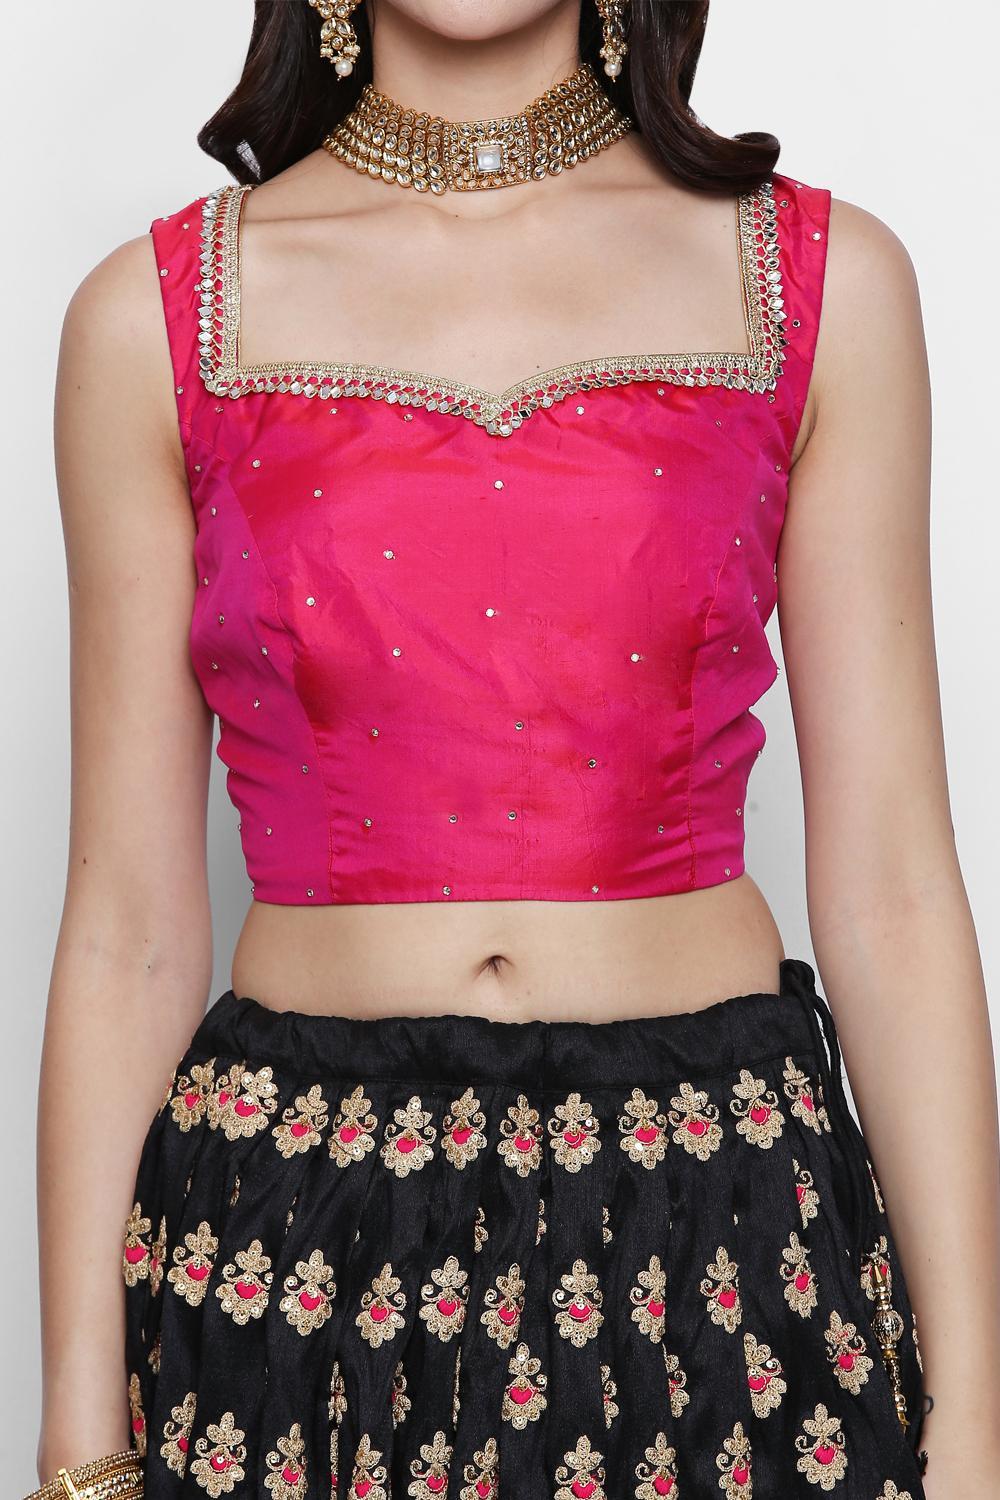 Black and Light Pink Taffeta Silk Lehenga | Party wear lehenga, Black  lehenga, Indian outfits lehenga